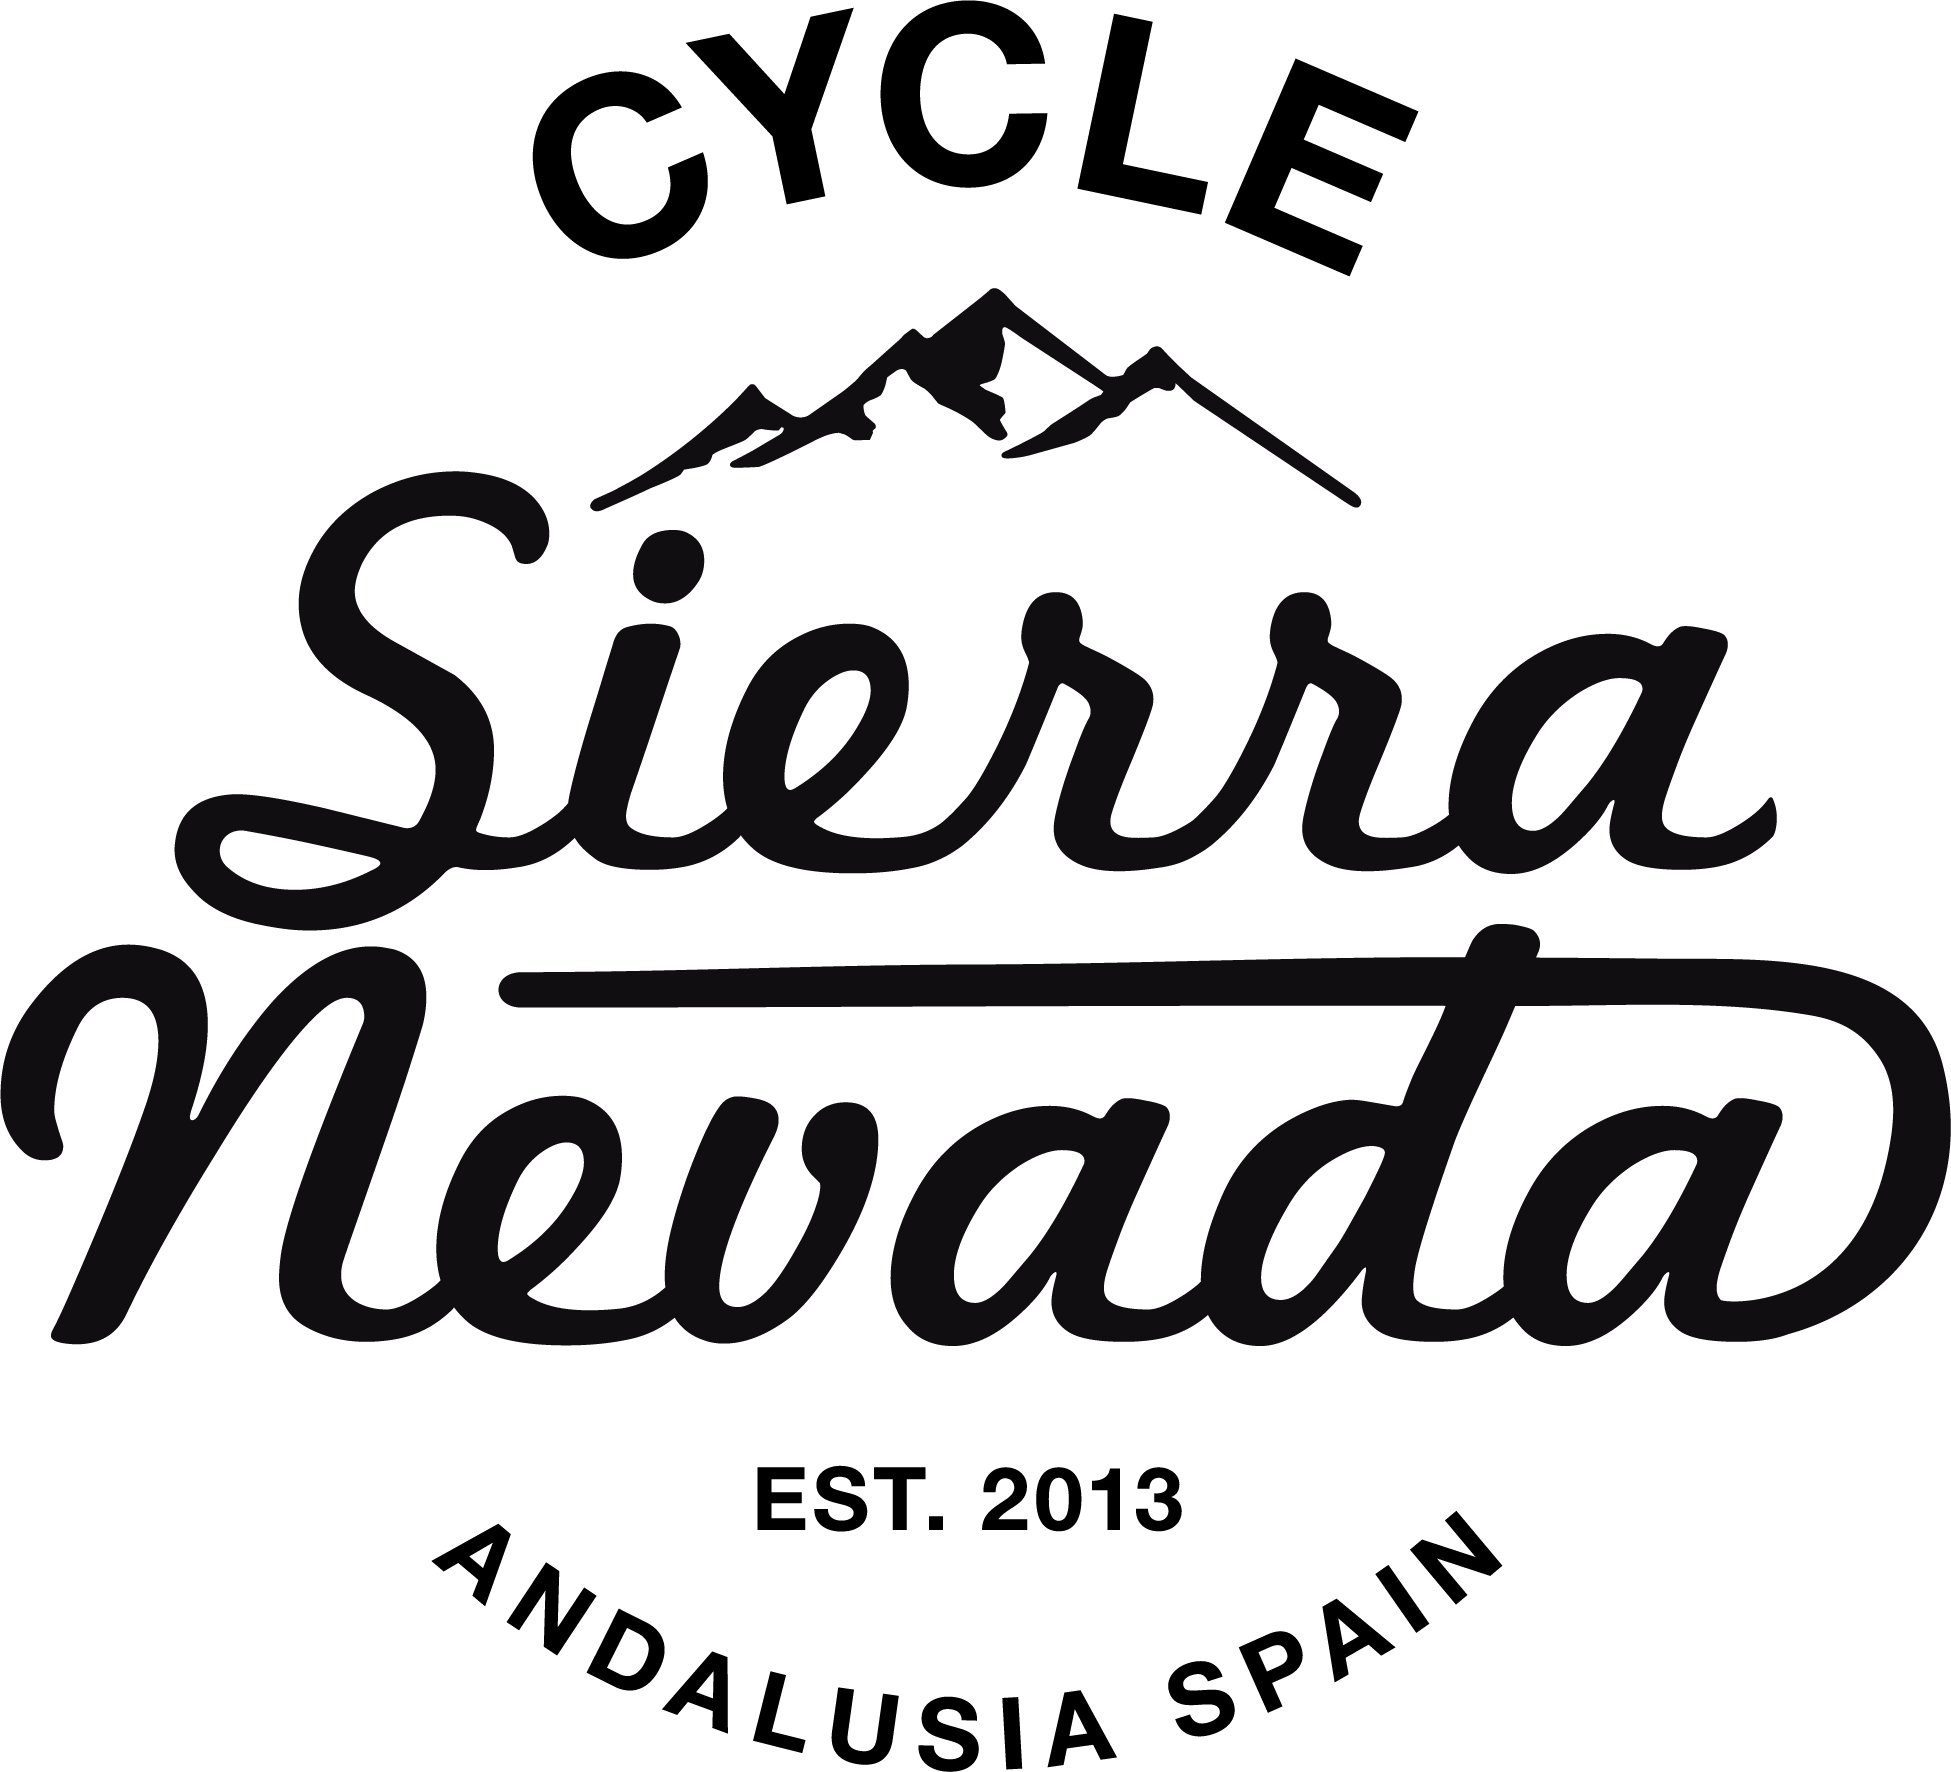 Cycle Sierra Nevada logo